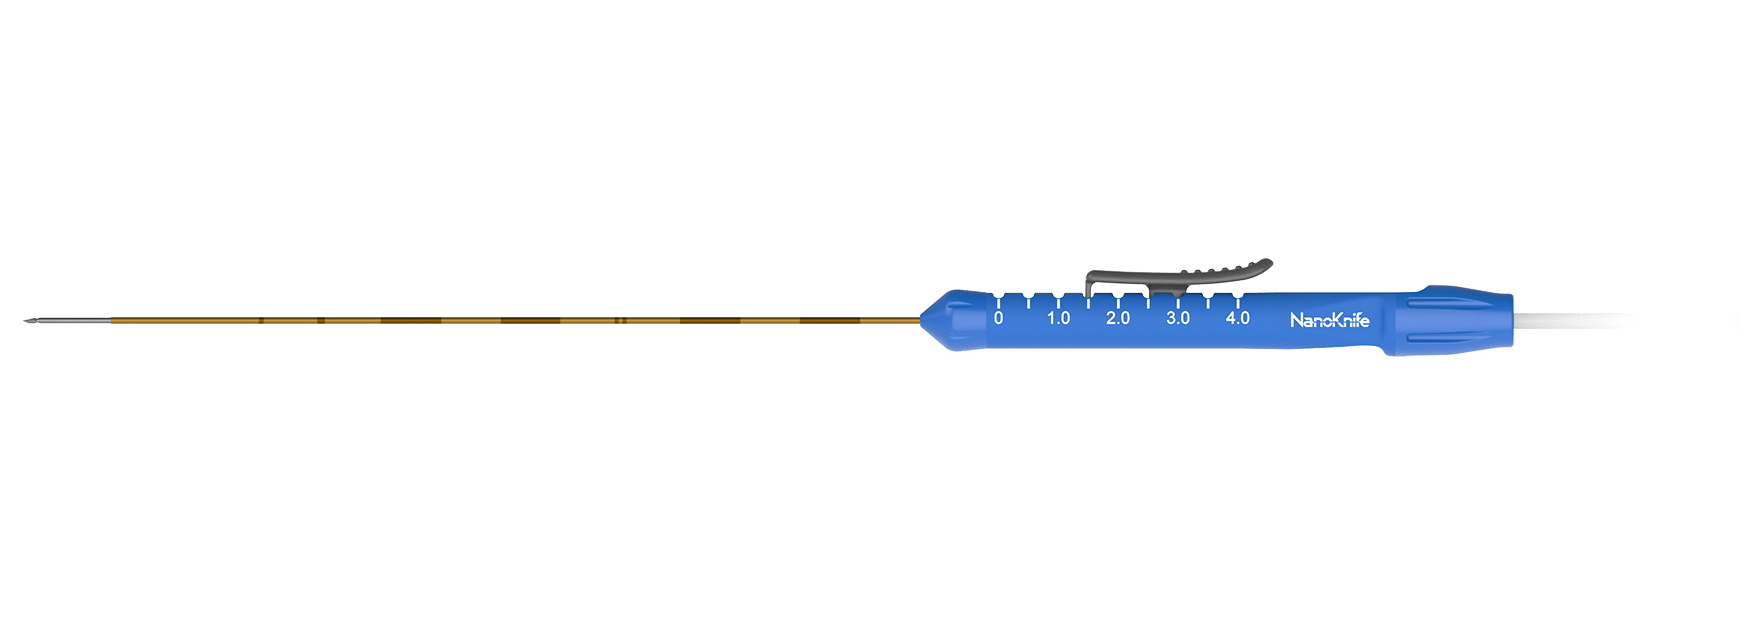 NanoKnife blue probe